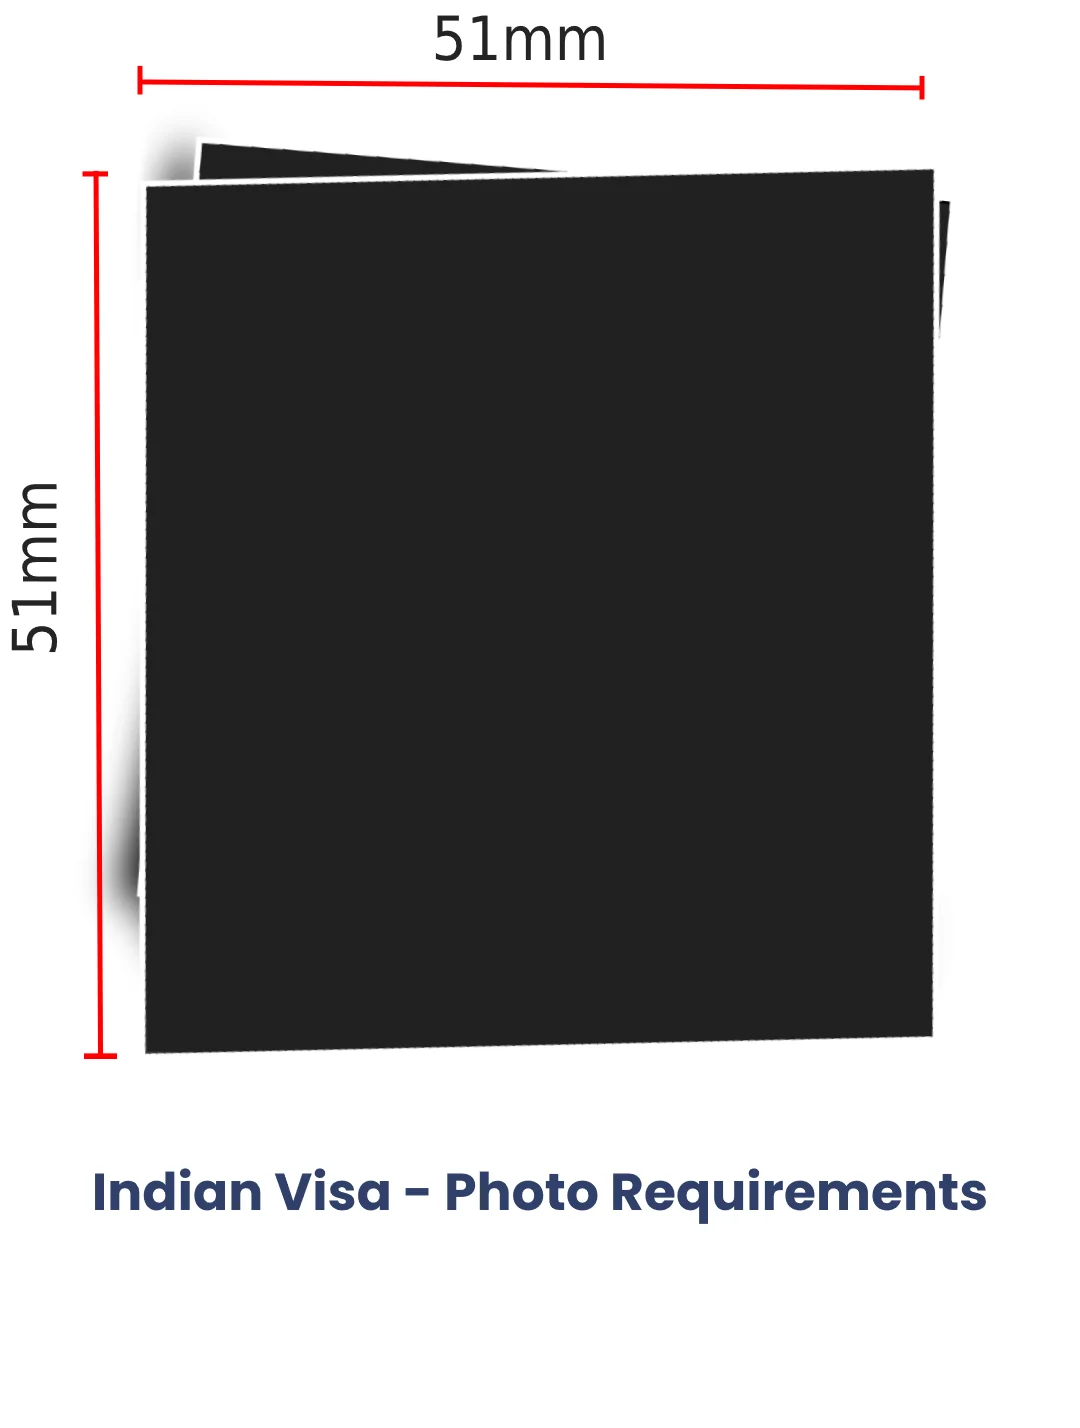 Indian Visa Photo Requirements